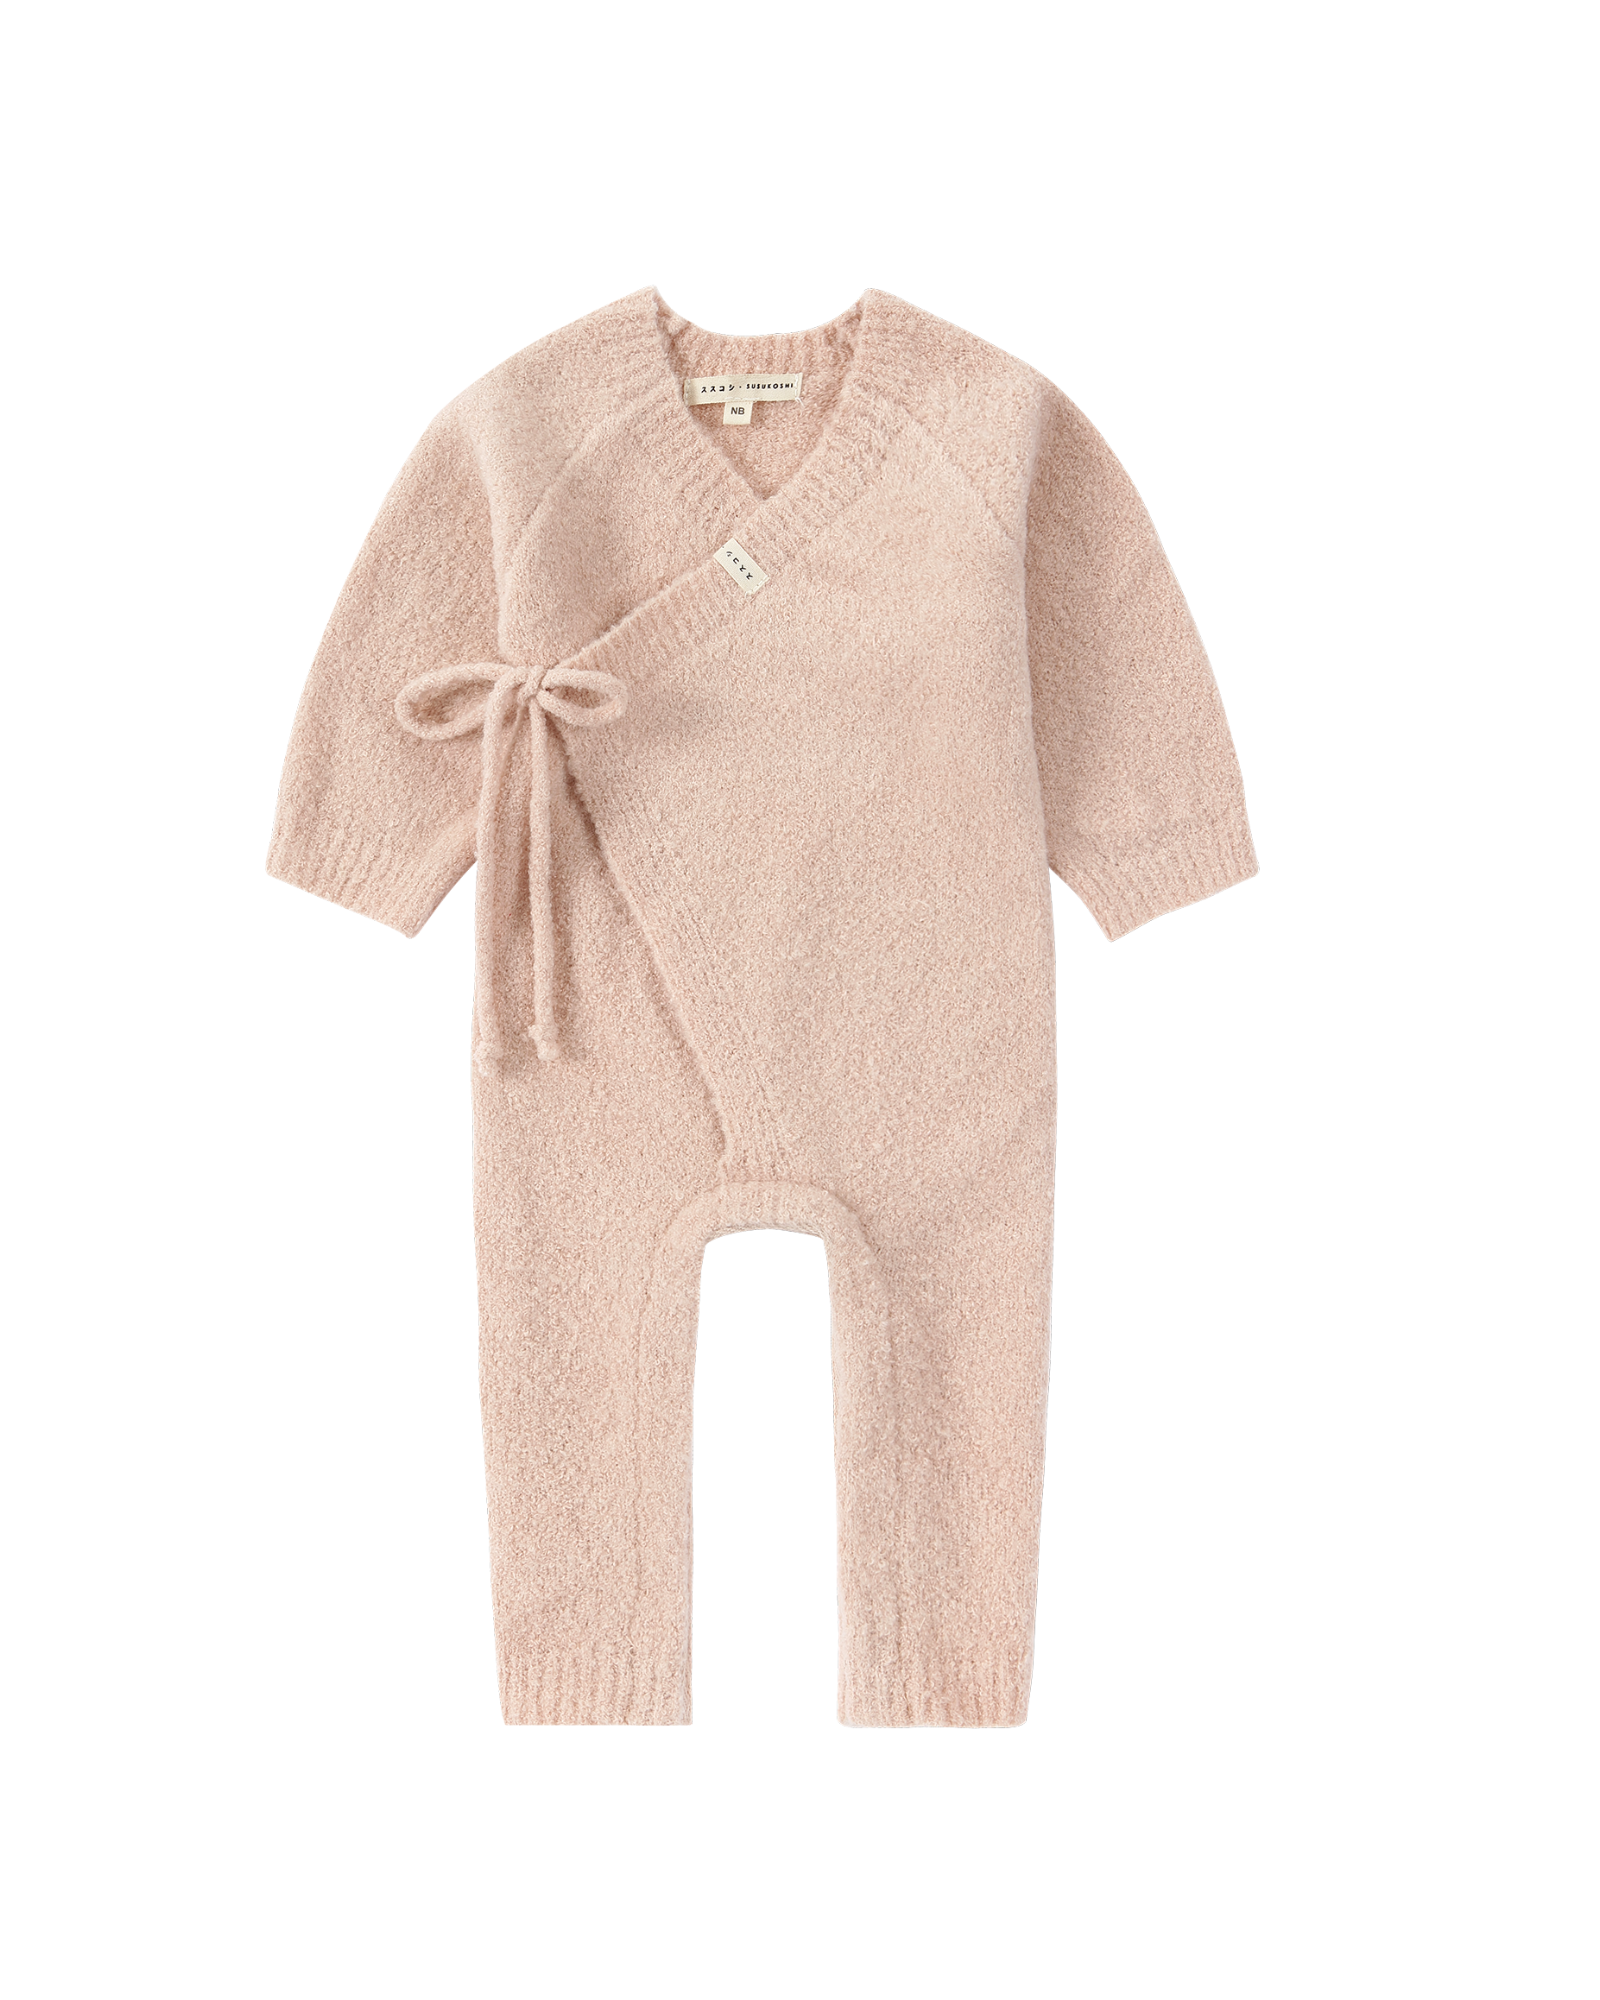 Boucle Baby Kimono Overall Suit. Rose Quartz